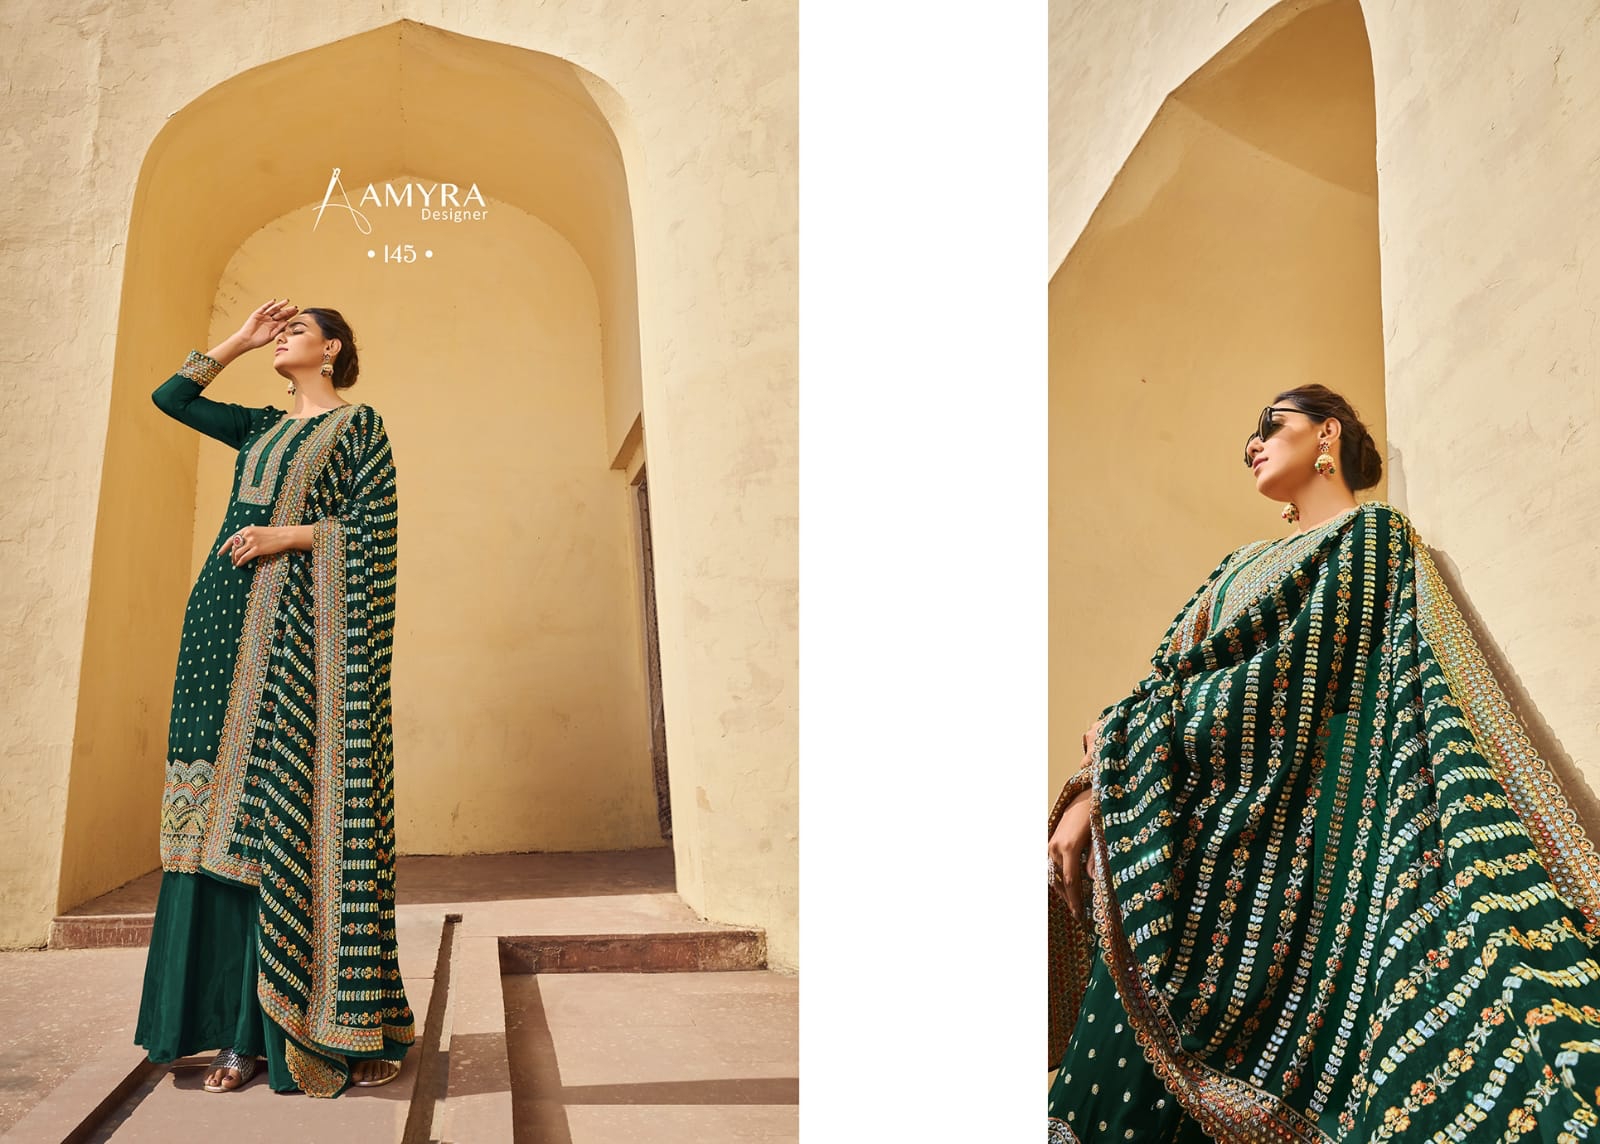 Amyra Designer Aaina 145